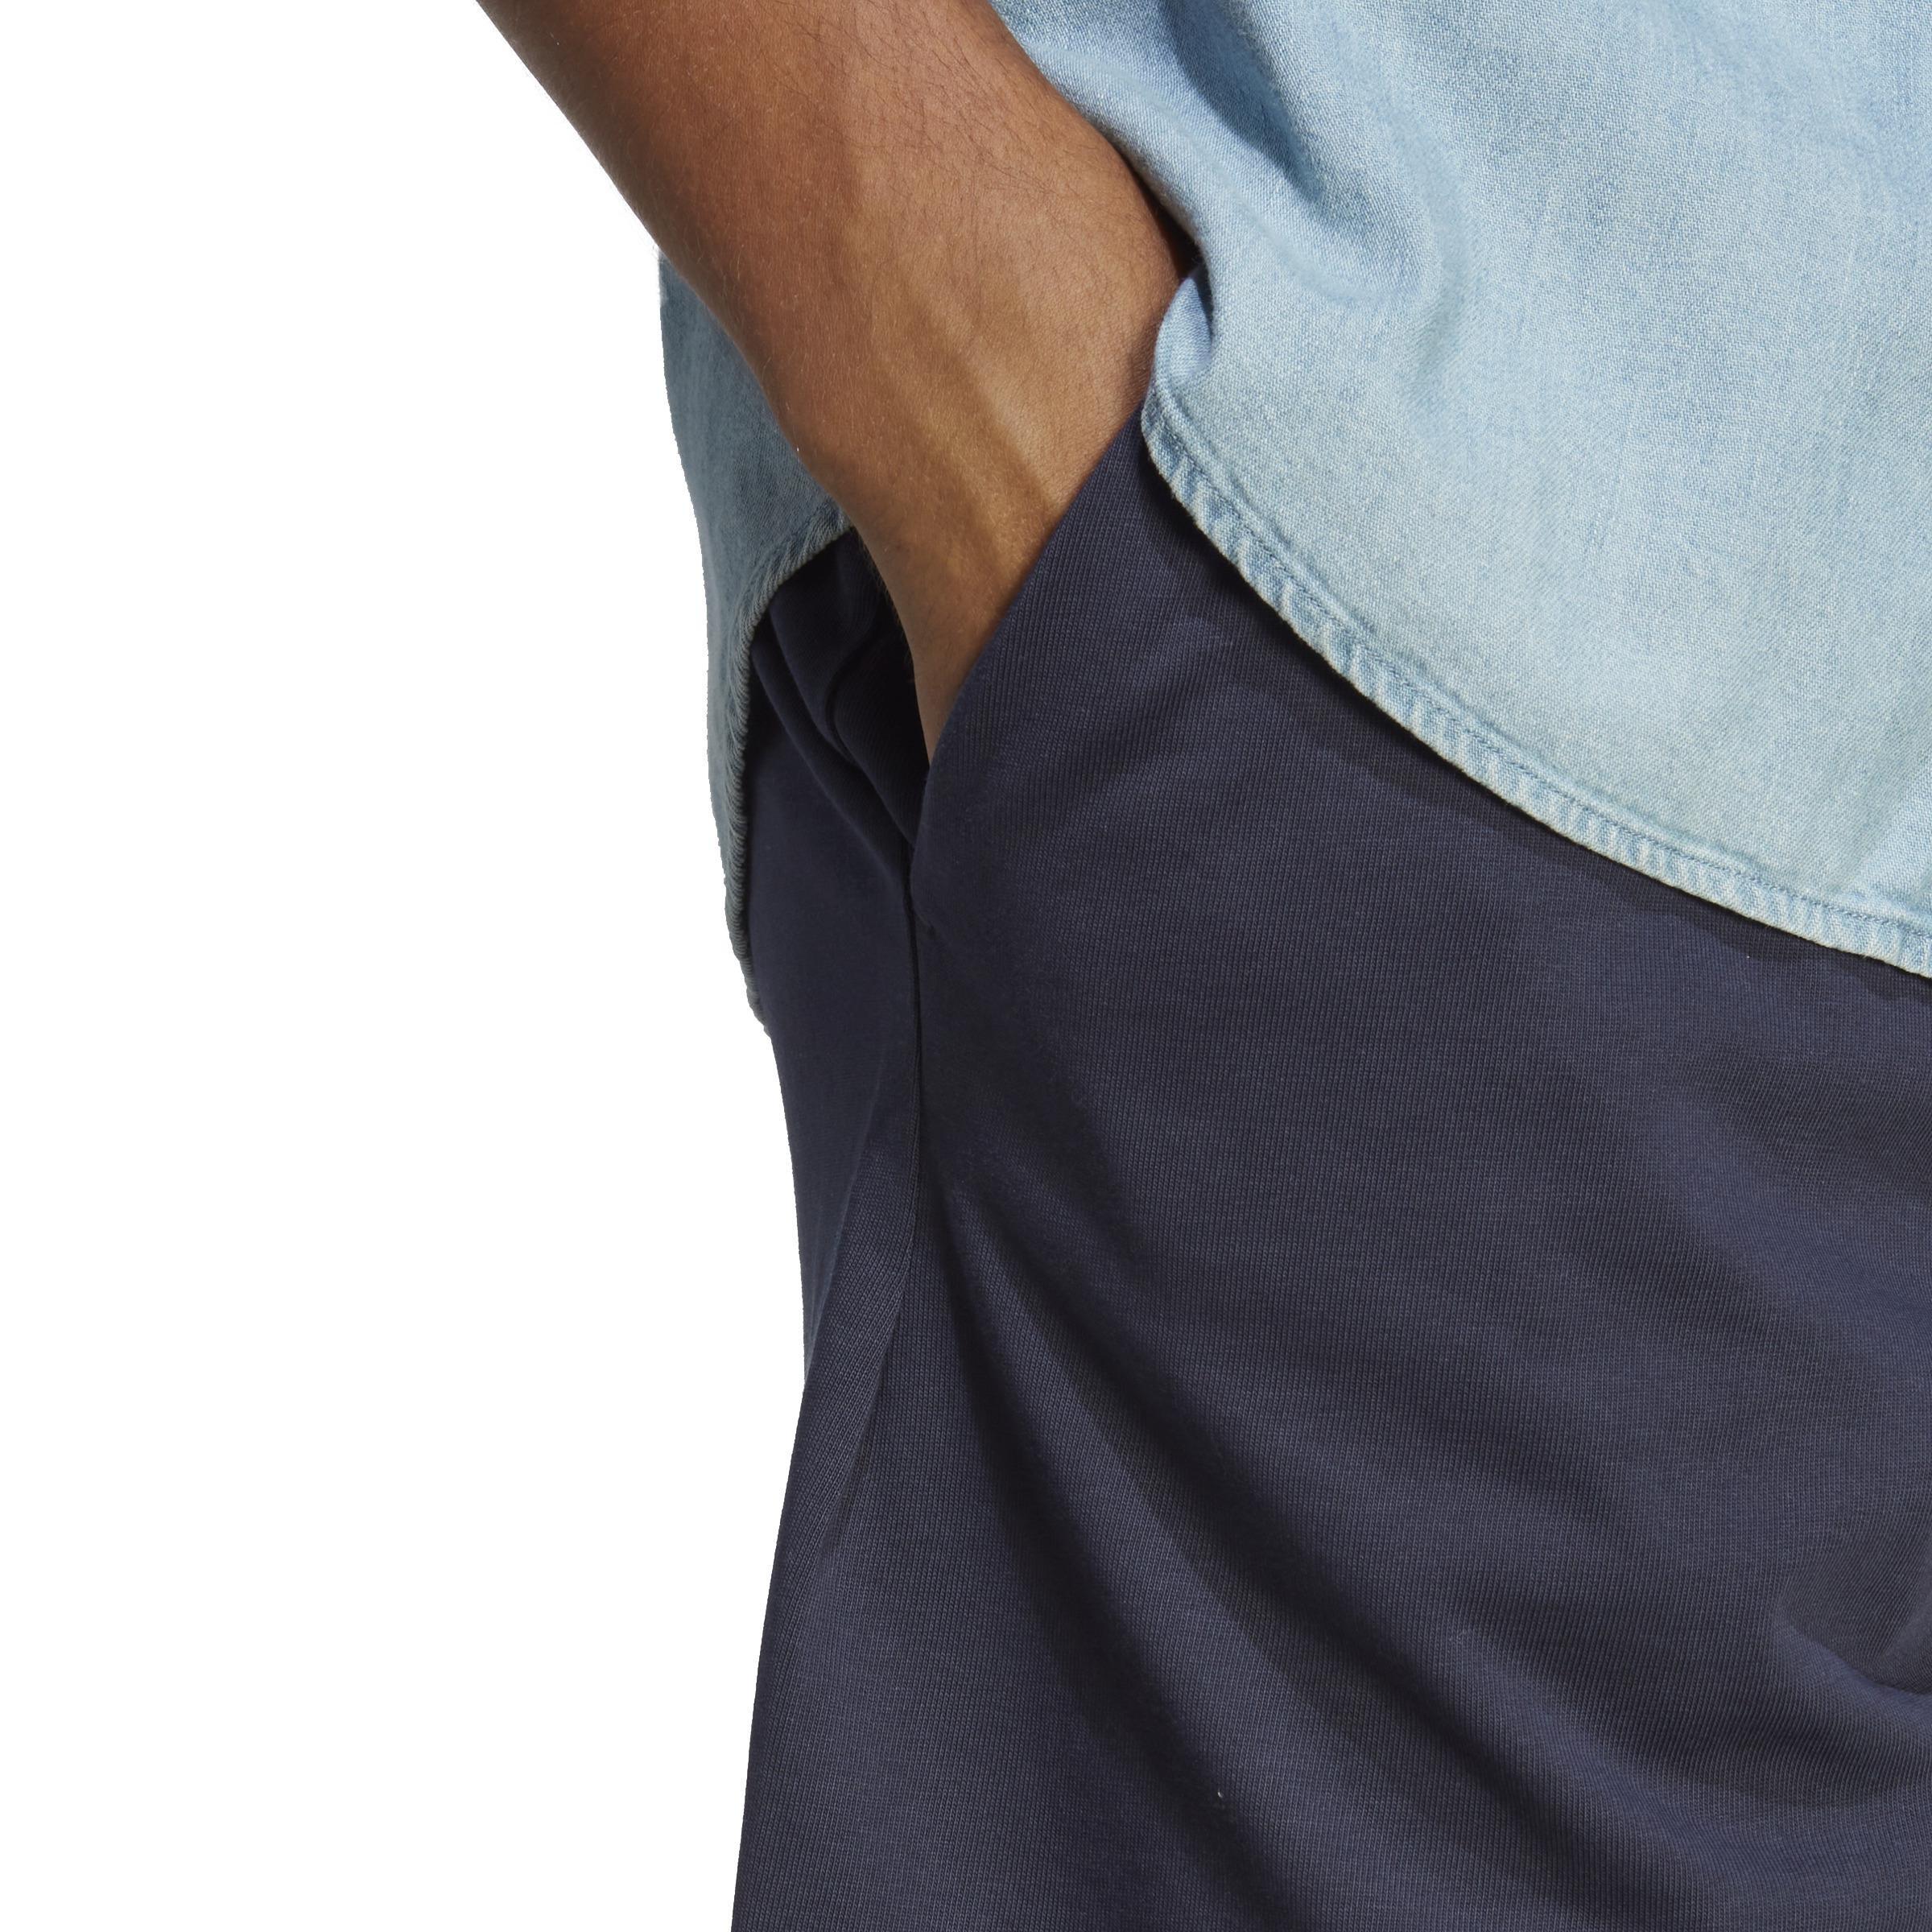 adidas - Men Essentials Logo Shorts, Navy